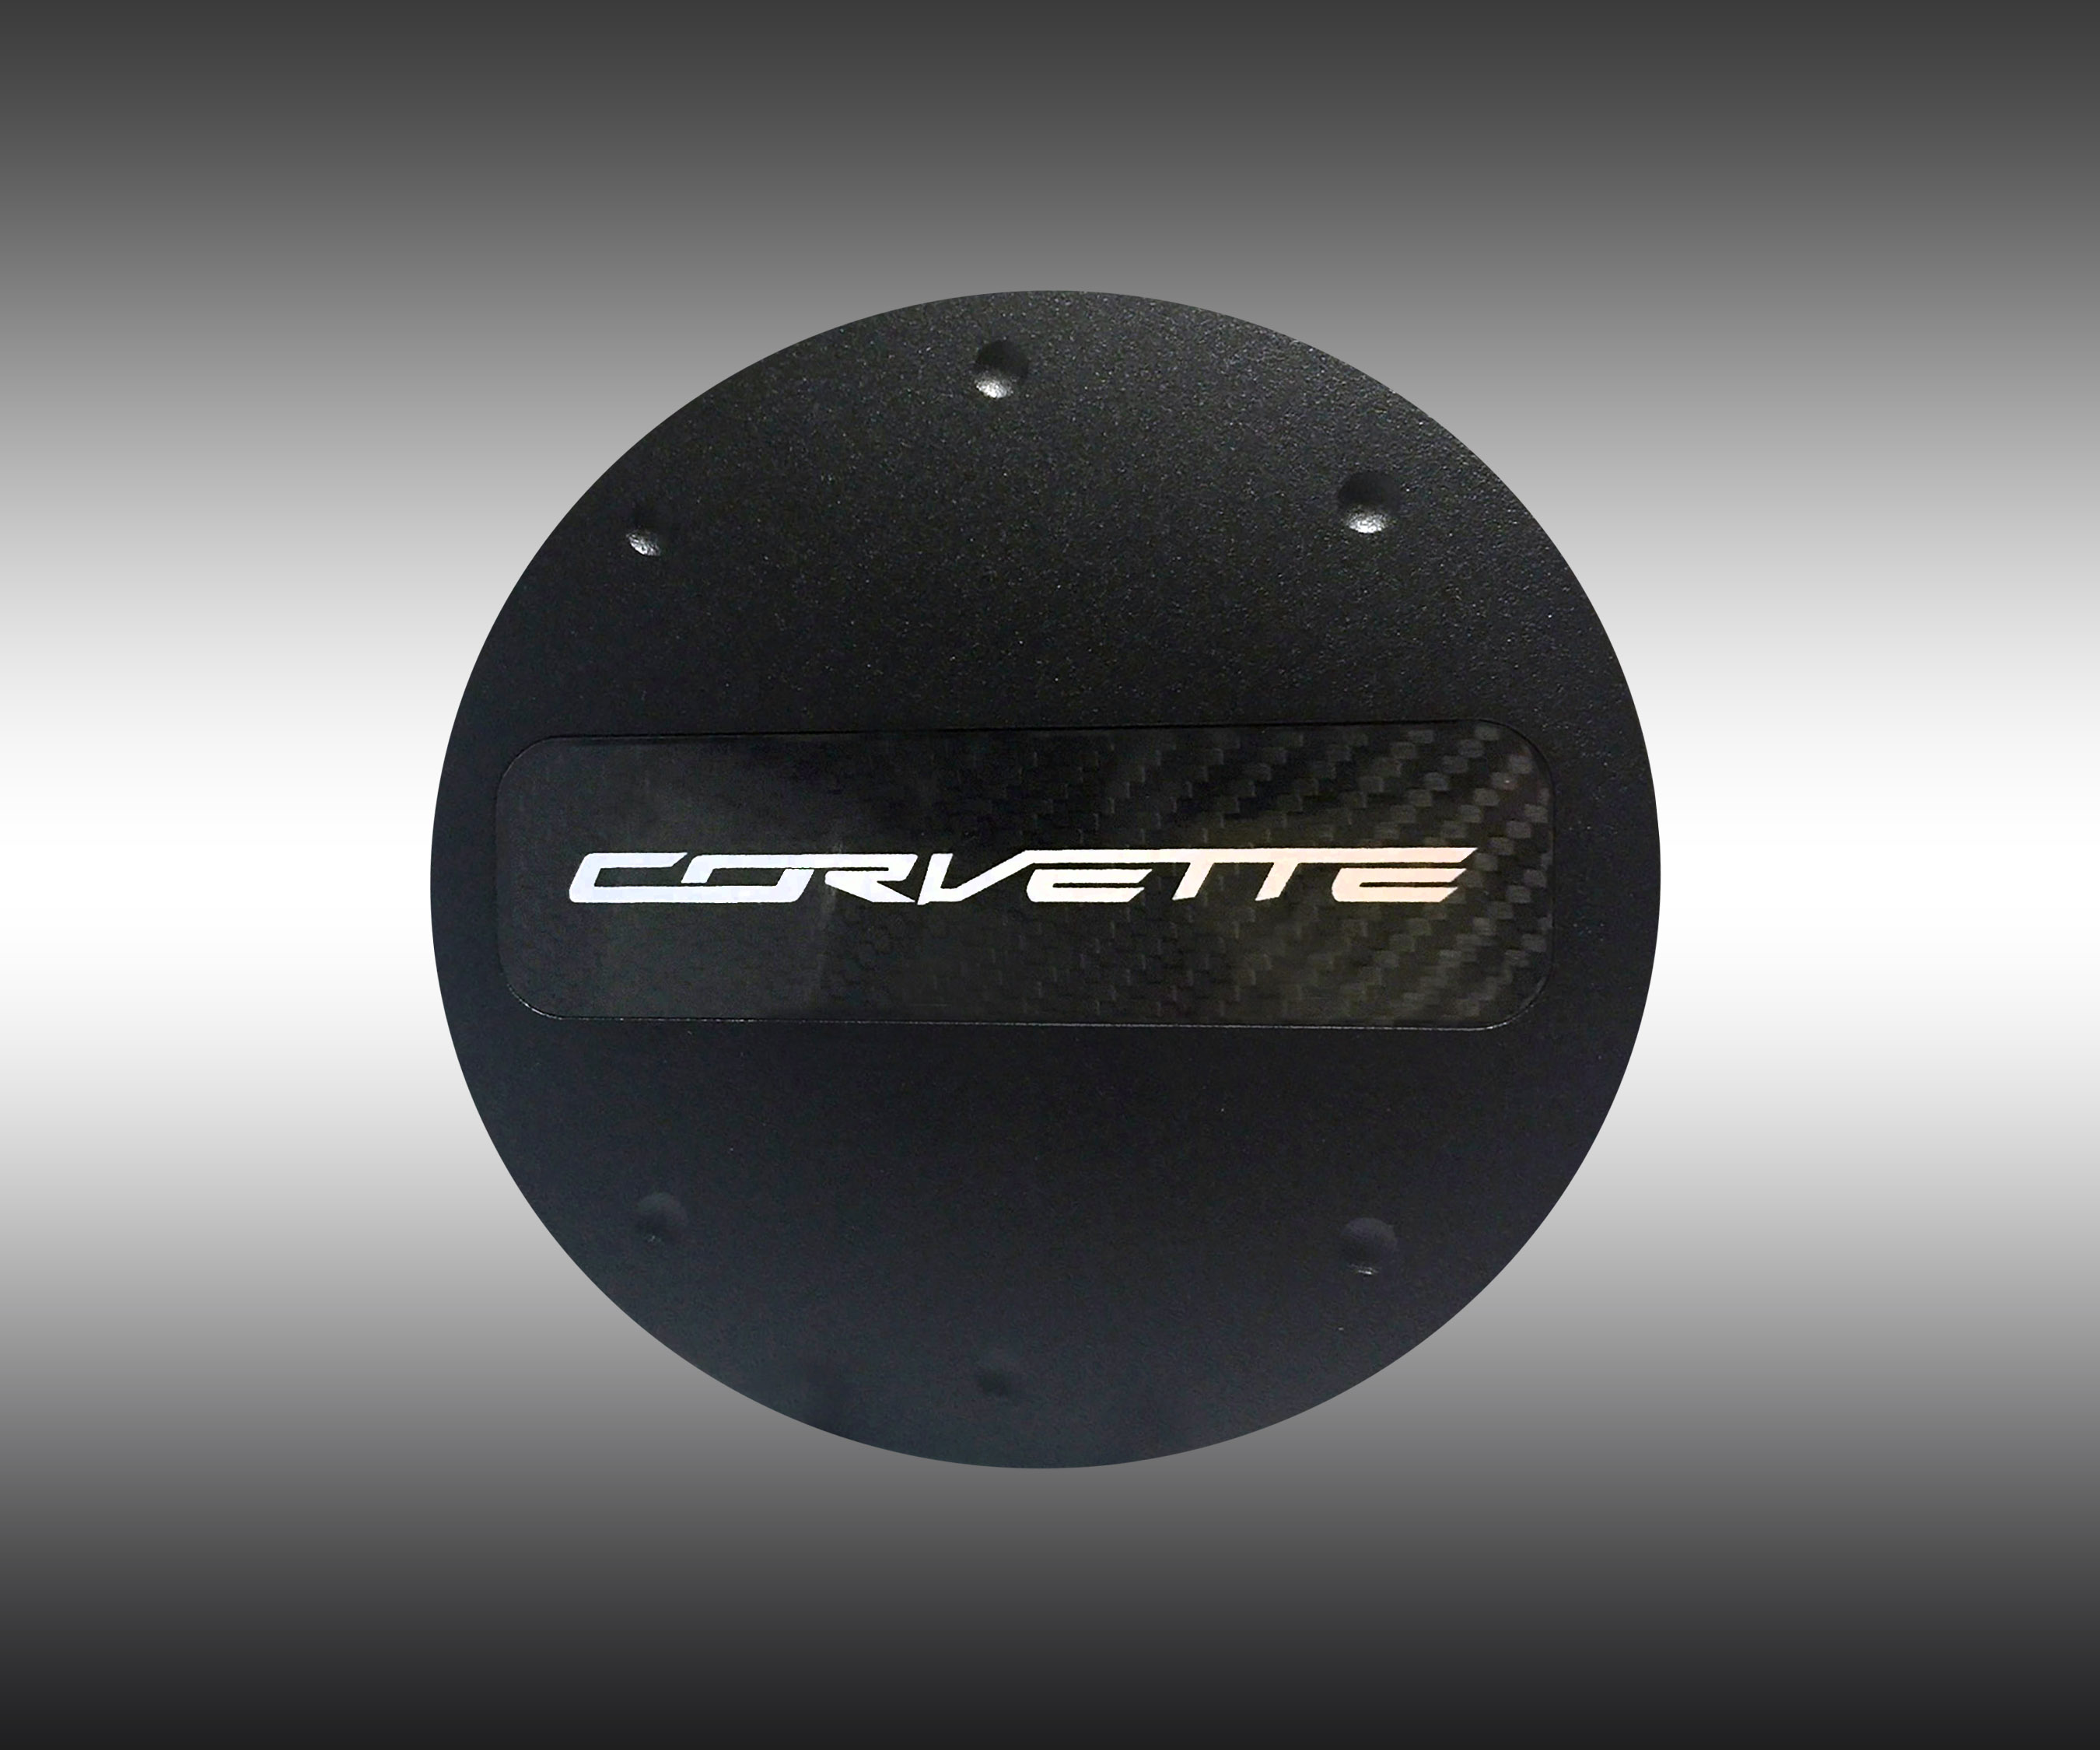 C7 Corvette Locking Fuel Door, Matte Black, Silver "Corvette" Logo on Carbon Fiber